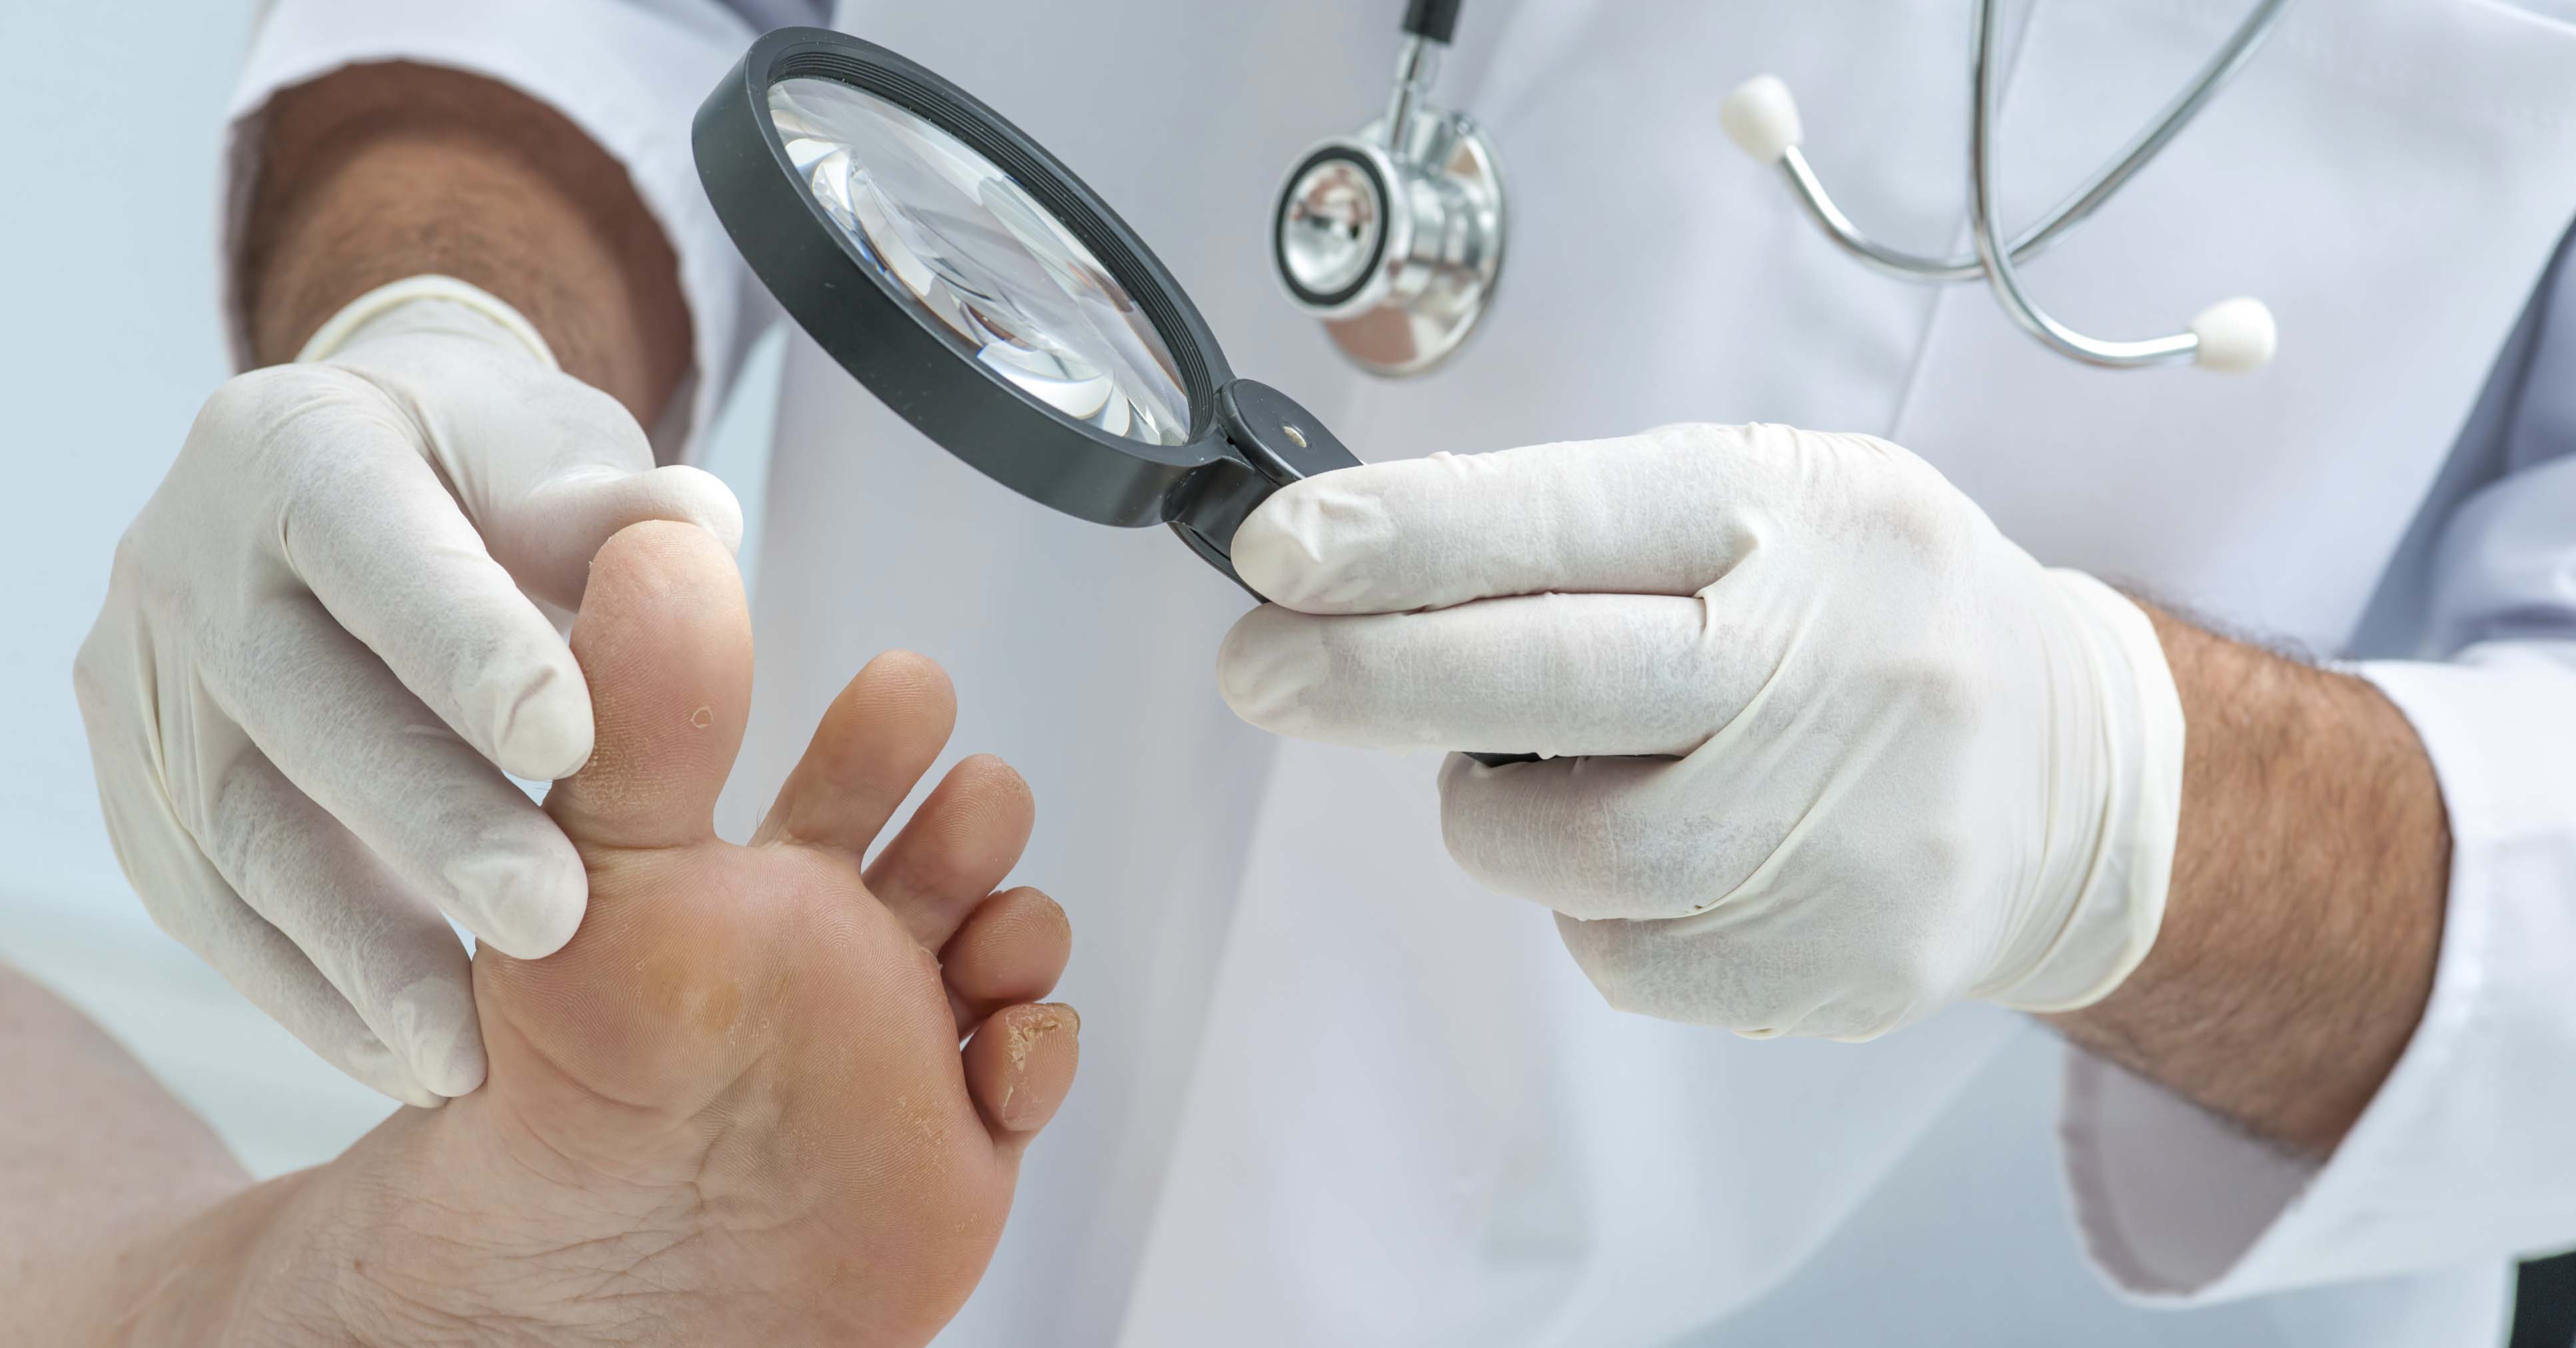  осмотр врача дерматолога-венеролога при болезнях ногтей